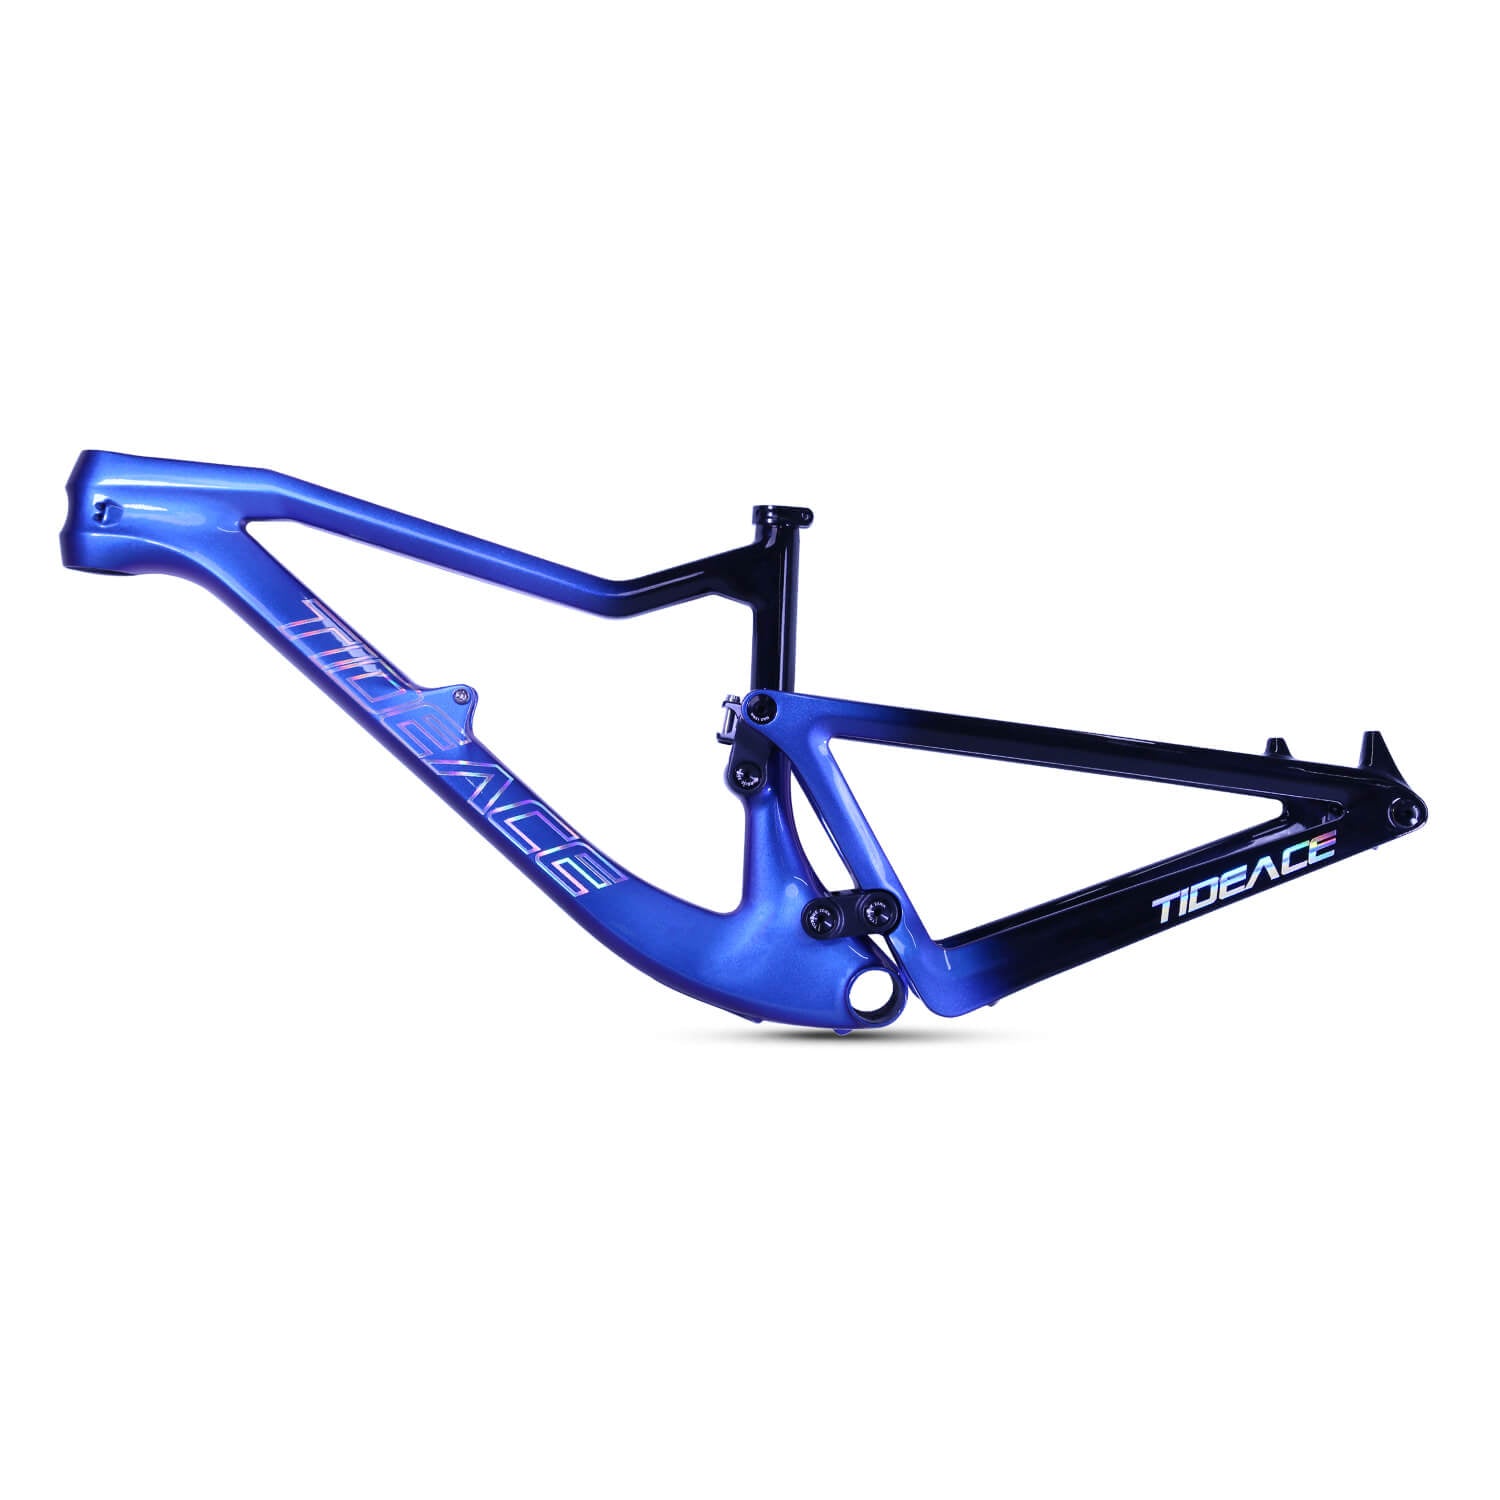 29er carbon enduro full suspension mountain bike frame